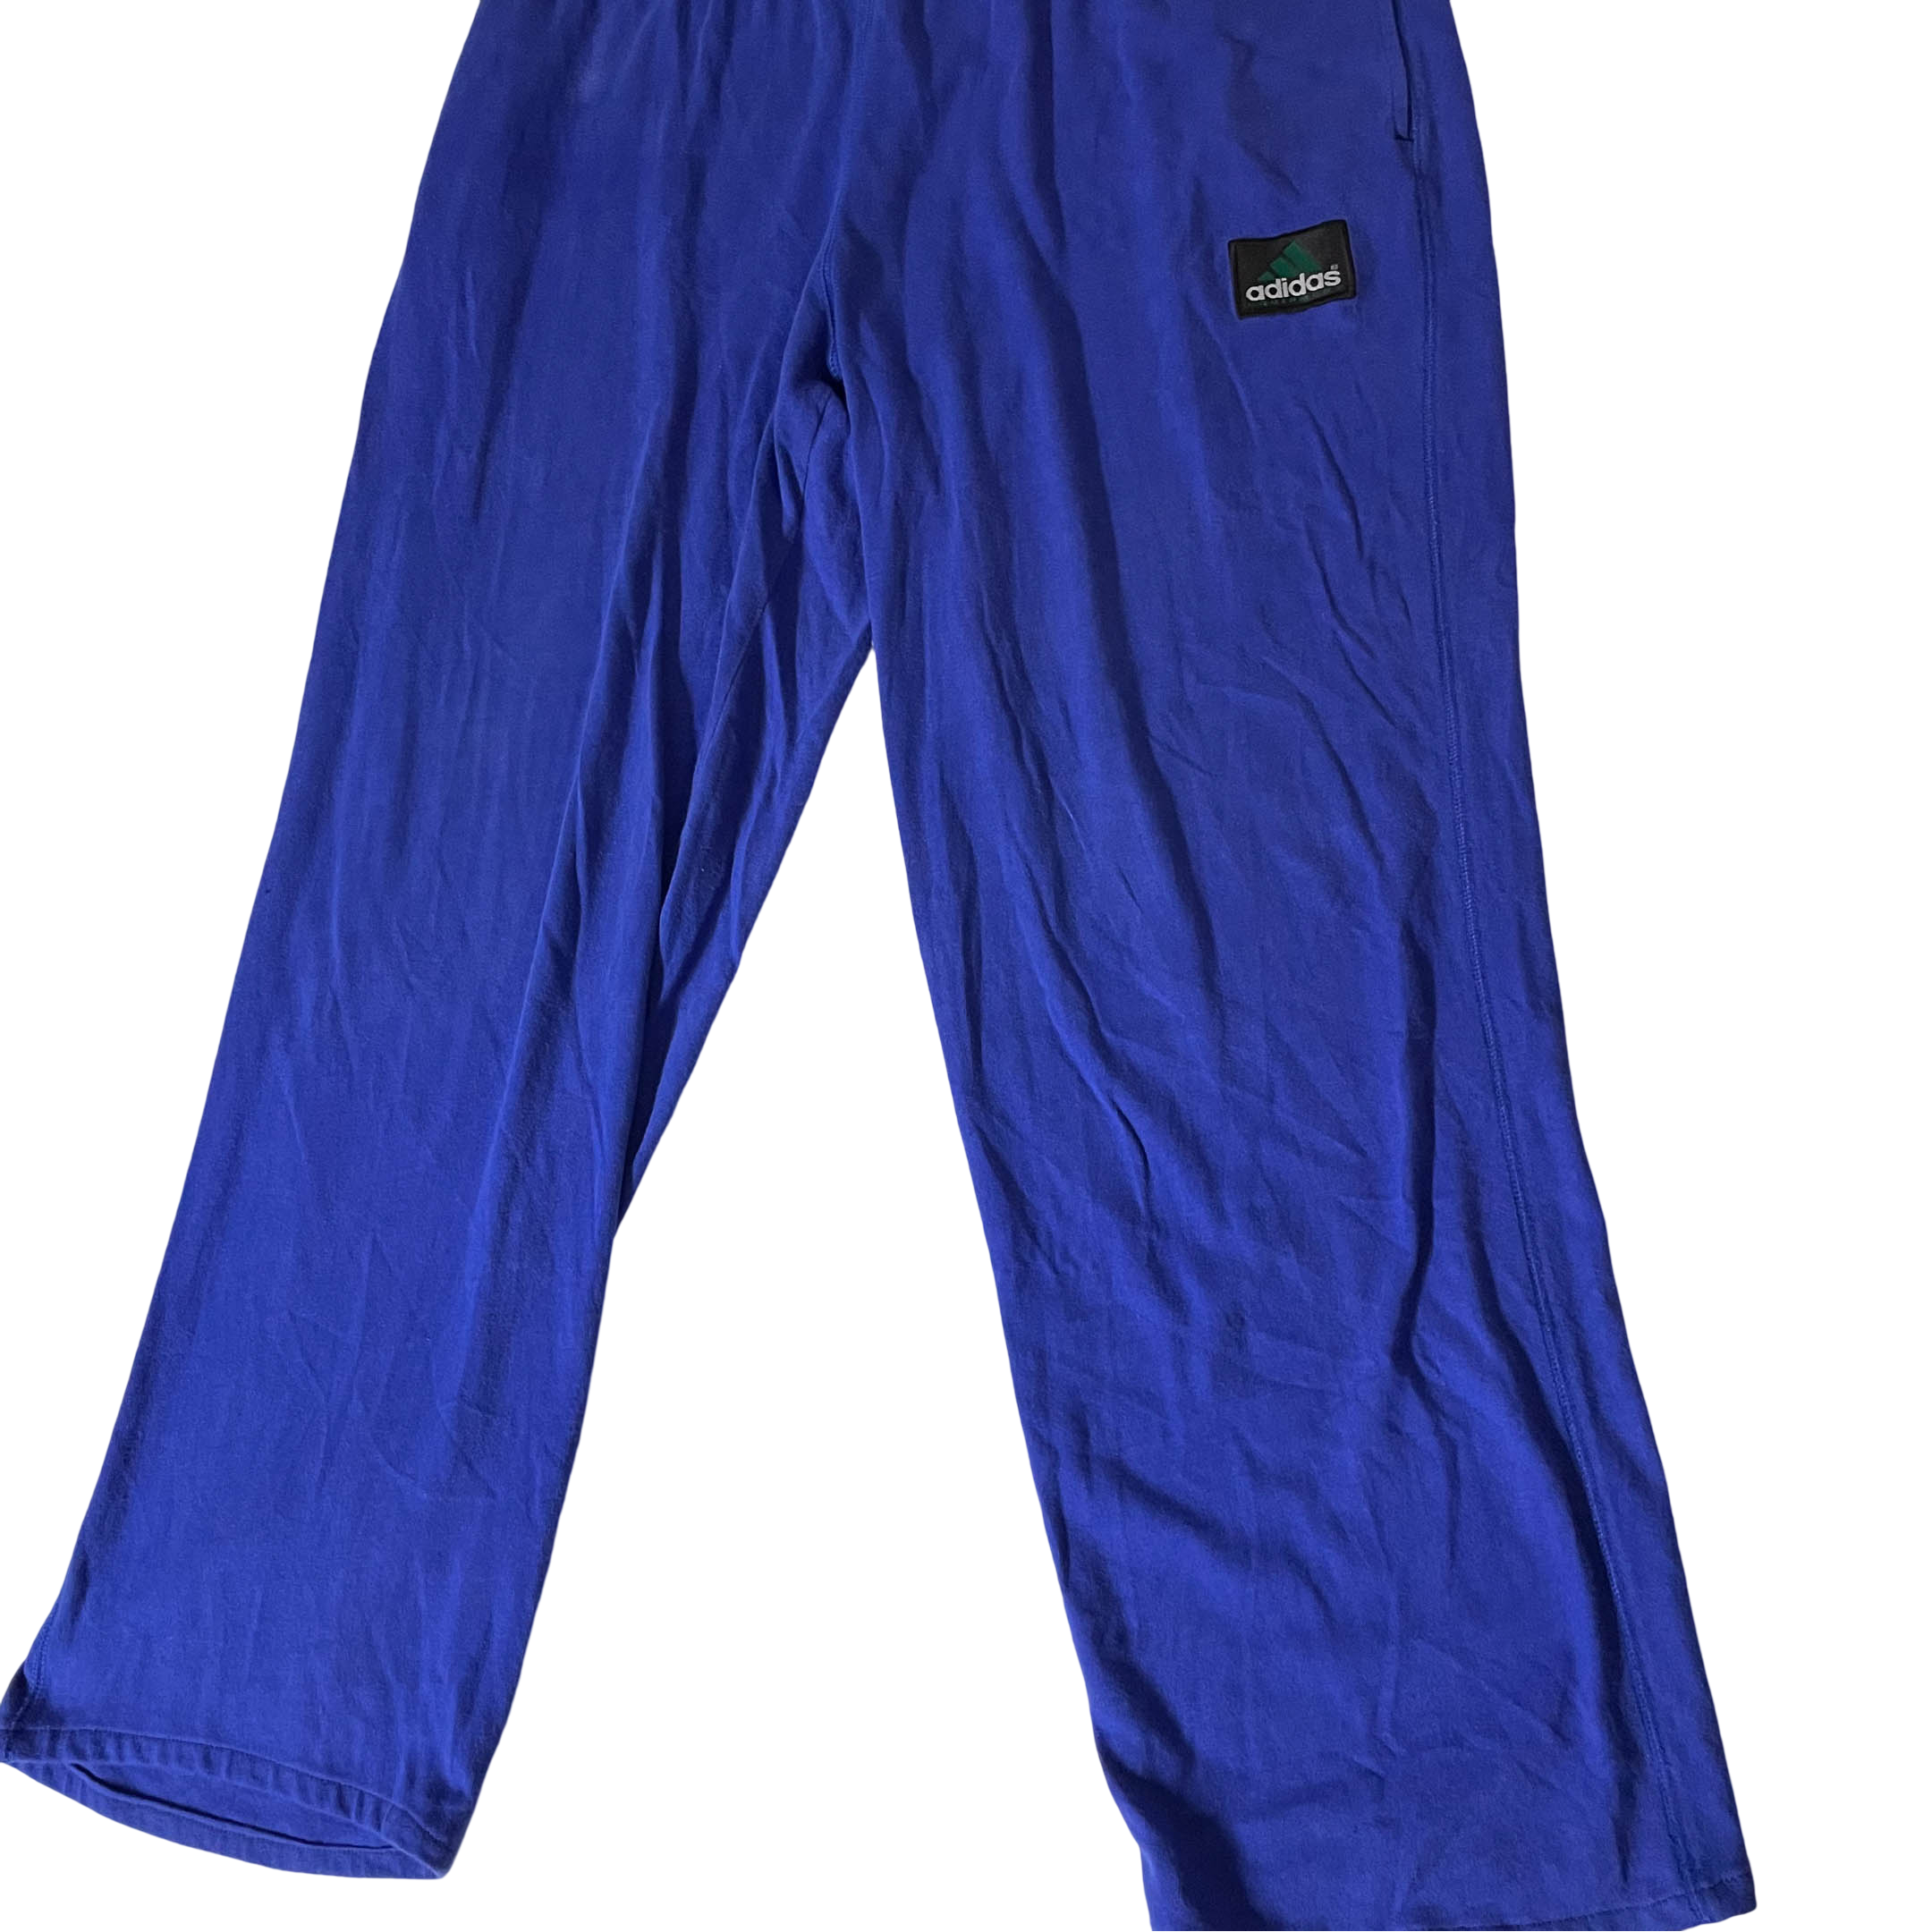 Vintage 90's Adidas Equipment blue sweat pant in L| L 34 W 28| SKU 3729